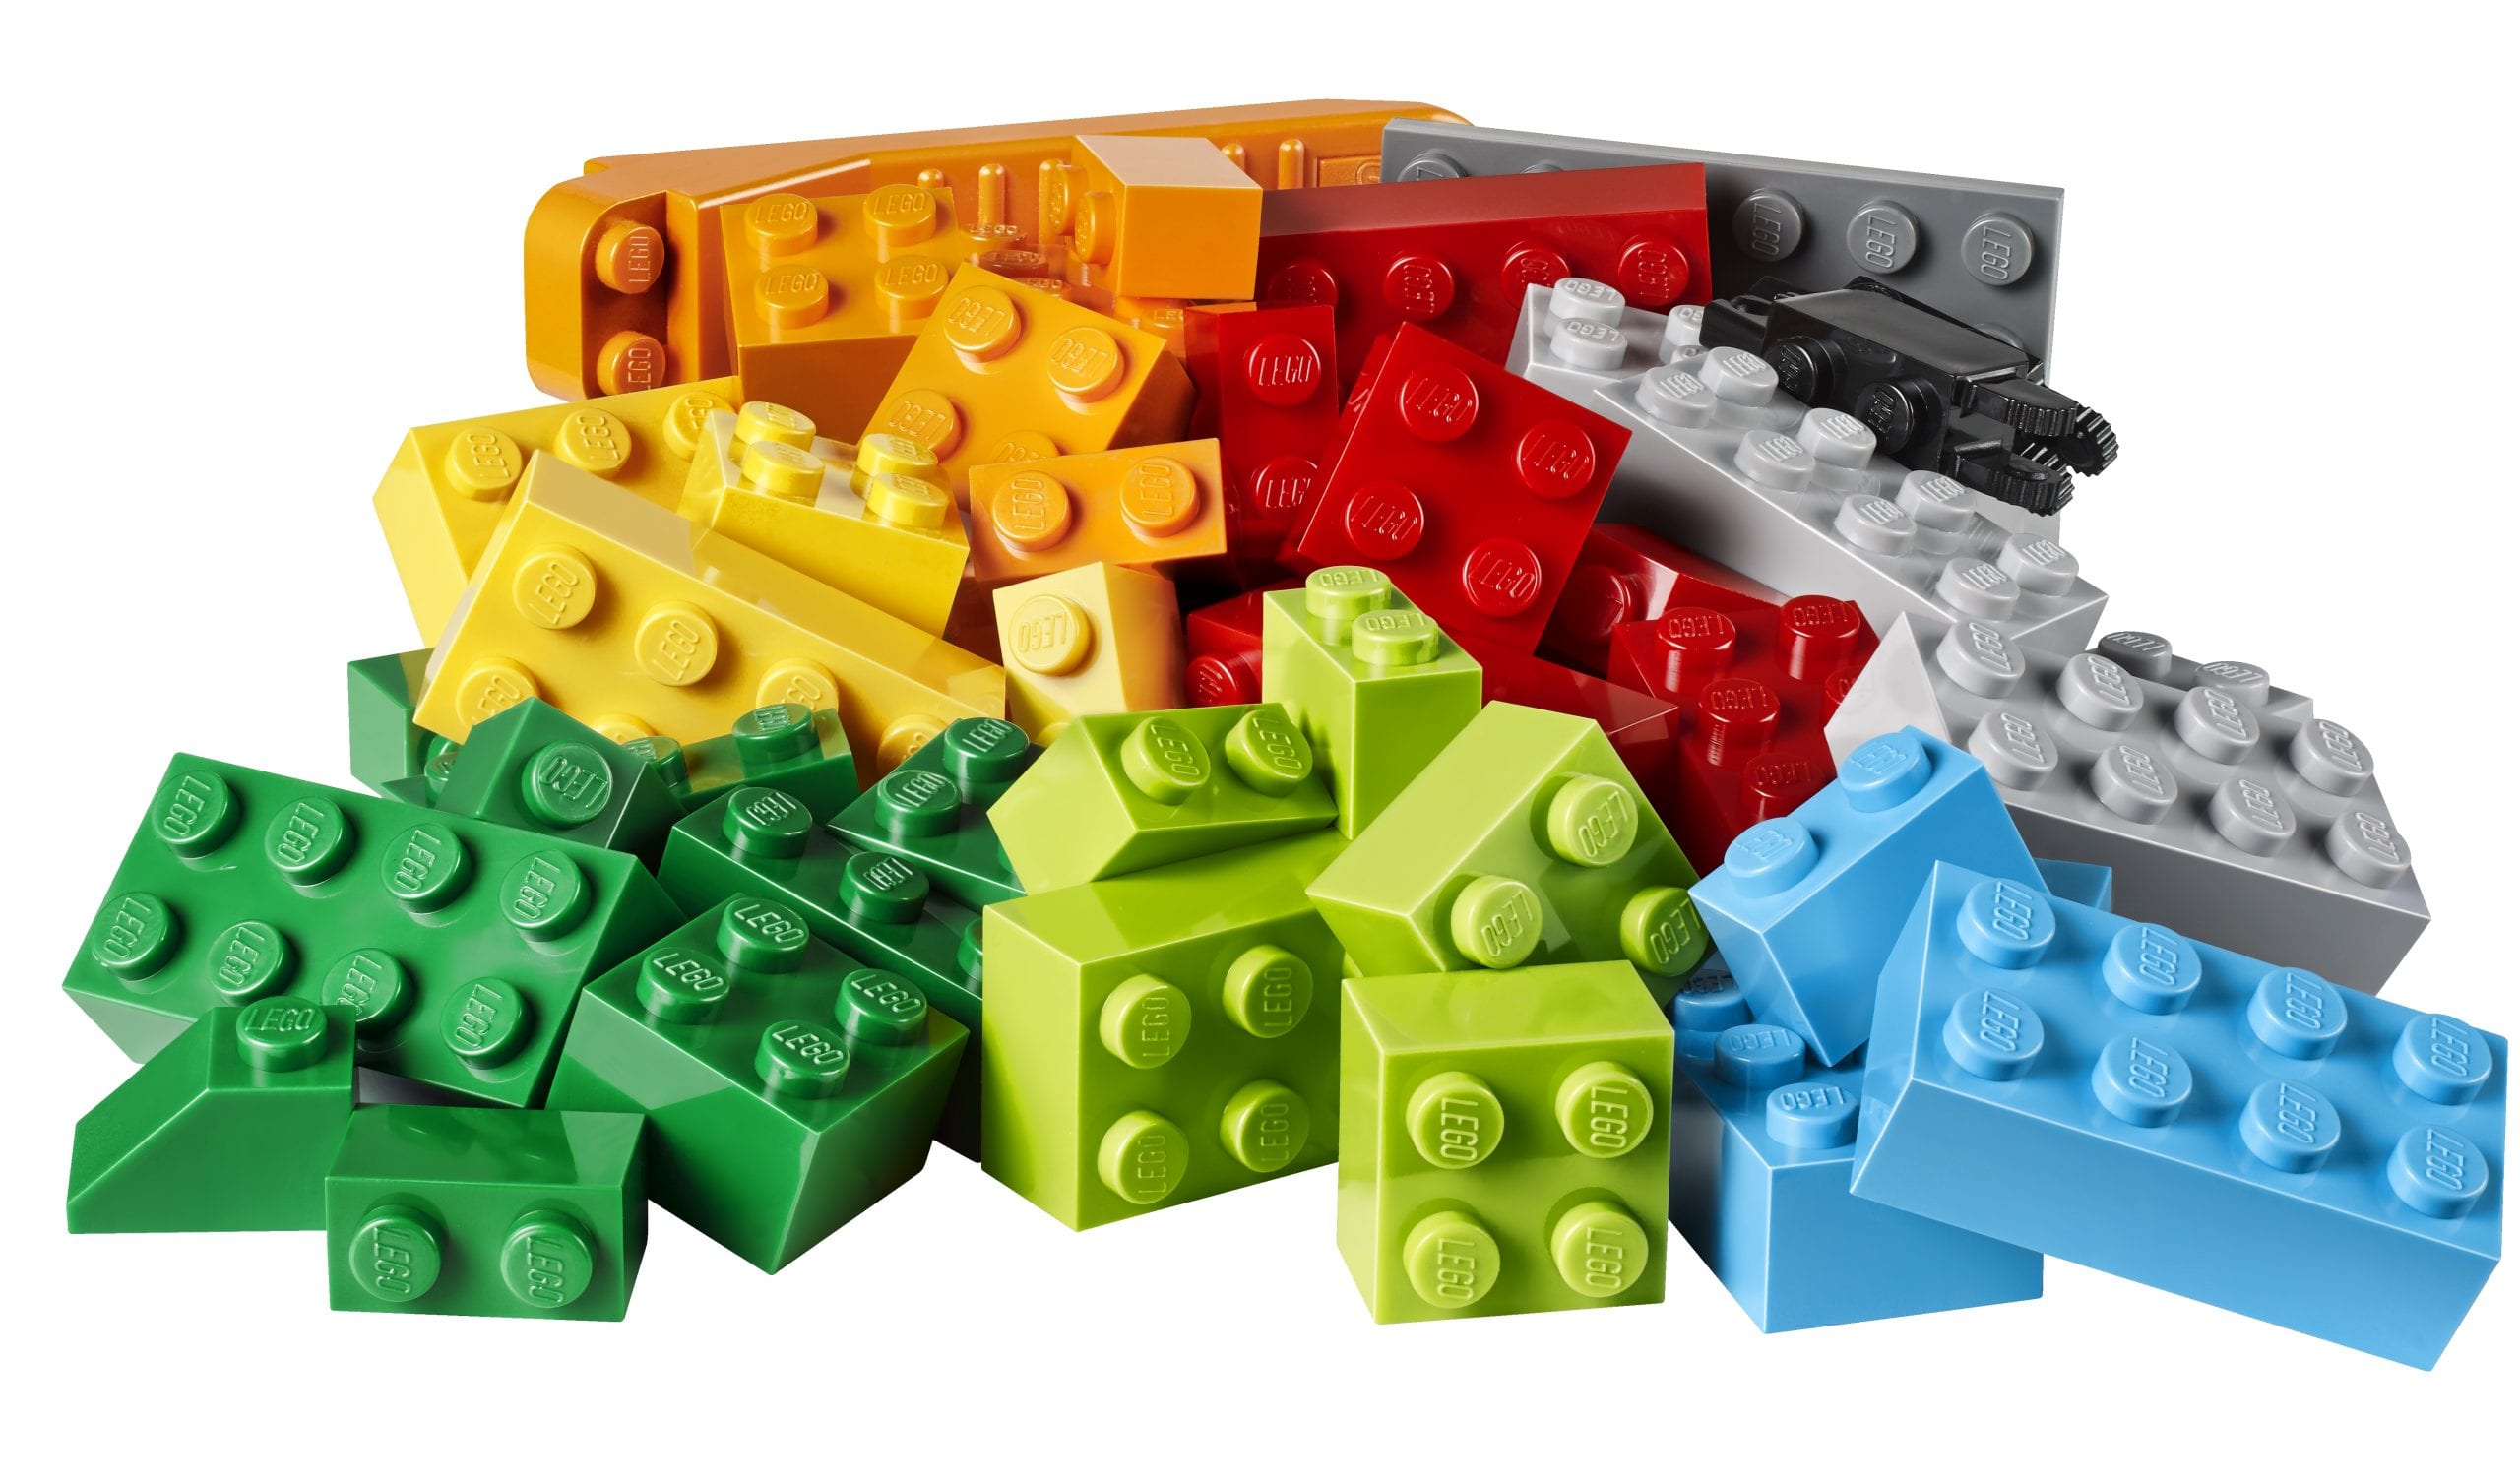 LEGO Building Block Contest Returns To Stony Brook TBR News Media